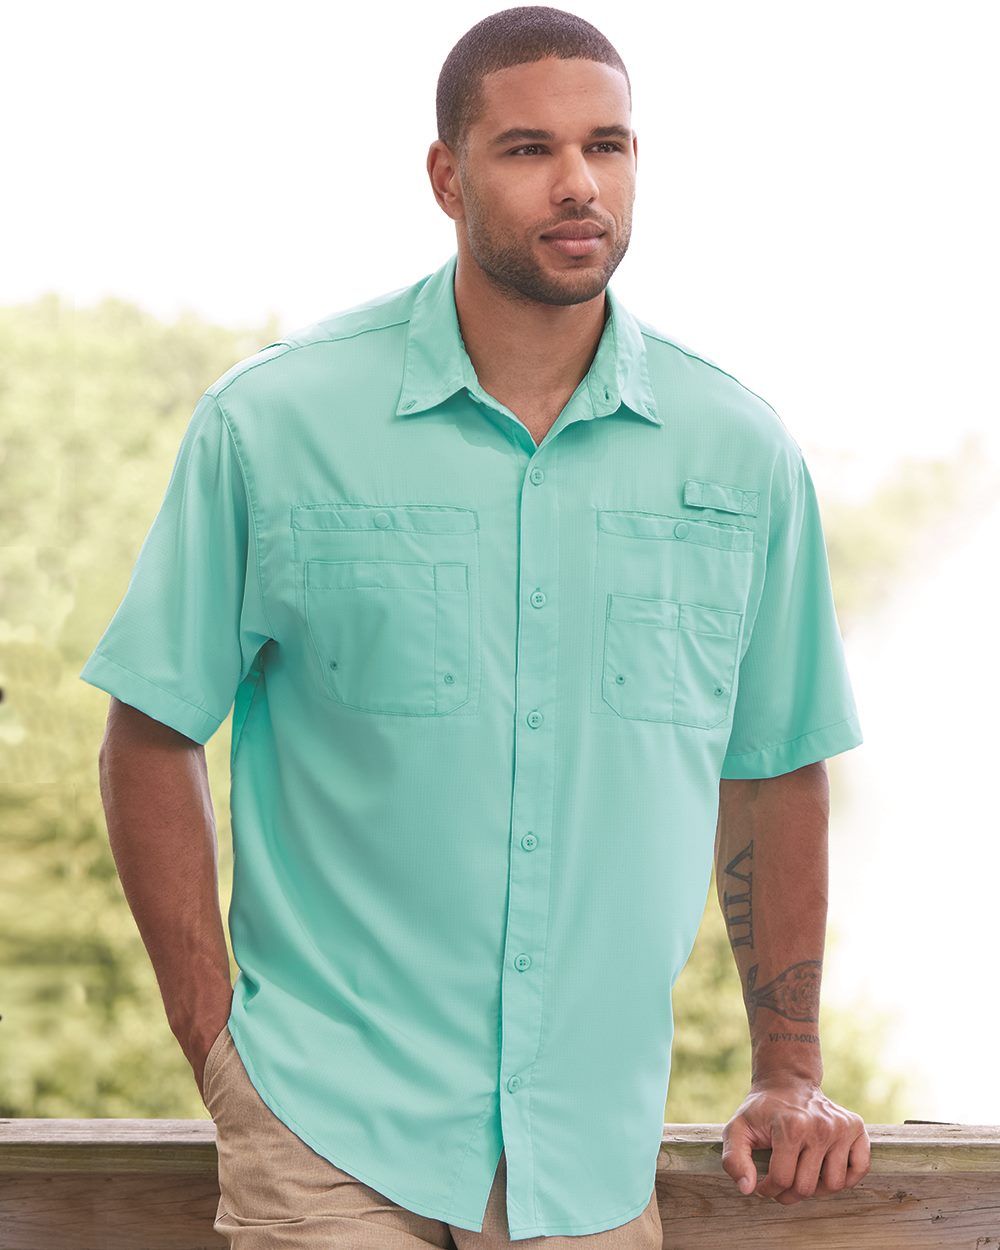 Hilton ZP2297 - Baja Short Sleeve Fishing Shirt $30.95